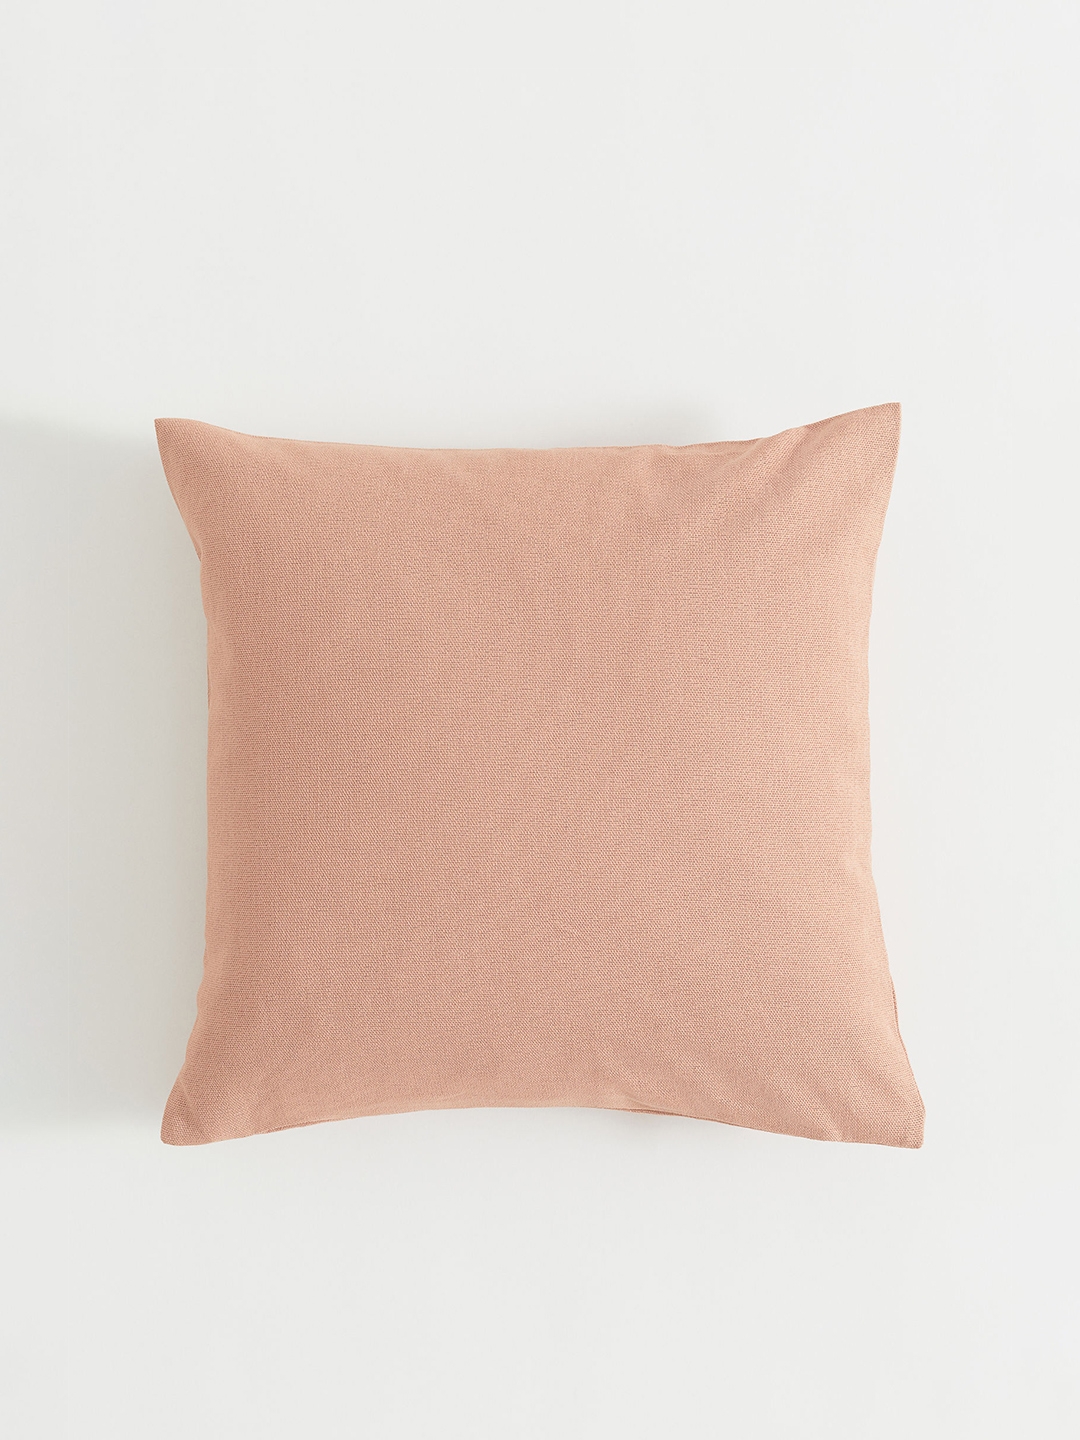 H&M Orange Cotton Canvas Cushion Cover